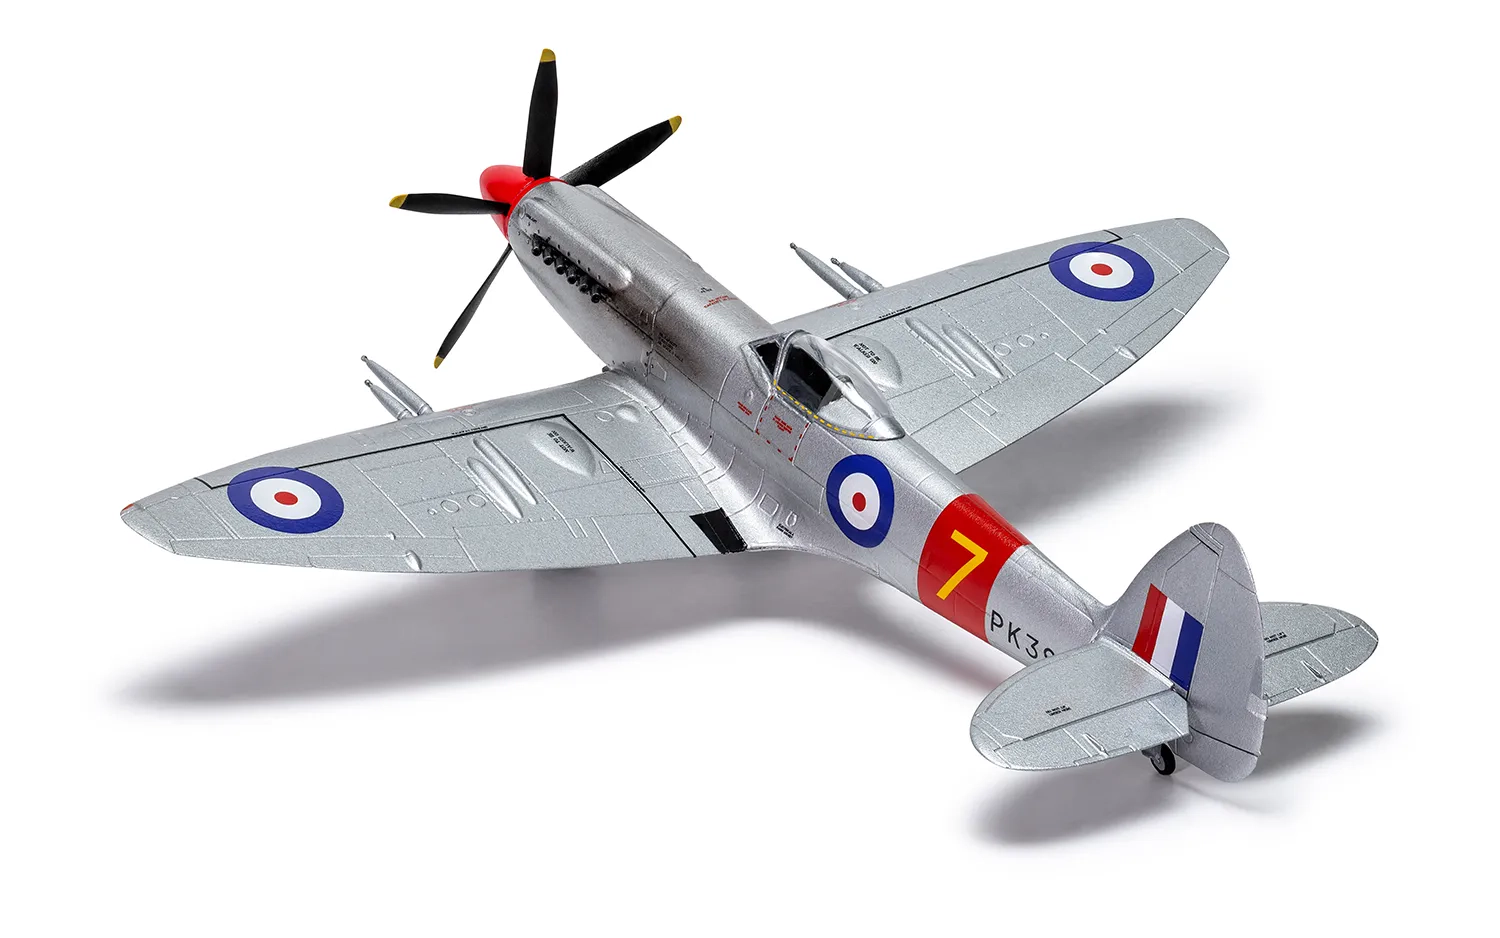 Supermarine Spitfire F.Mk.22